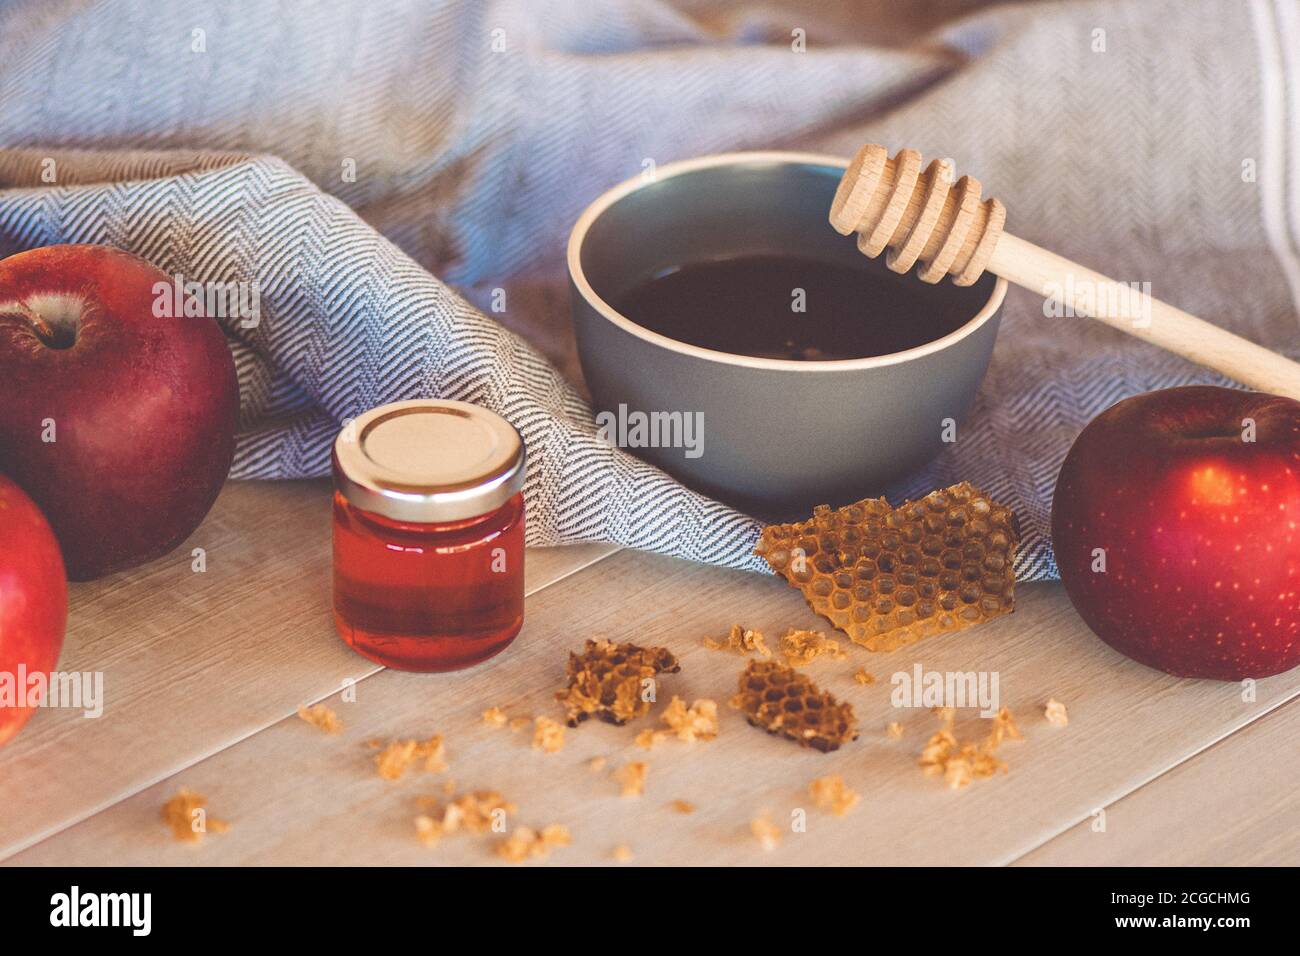 Jewish National Holiday. Rosh Hashana with honey, apple and pomegranate on wooden table. Stock Photo